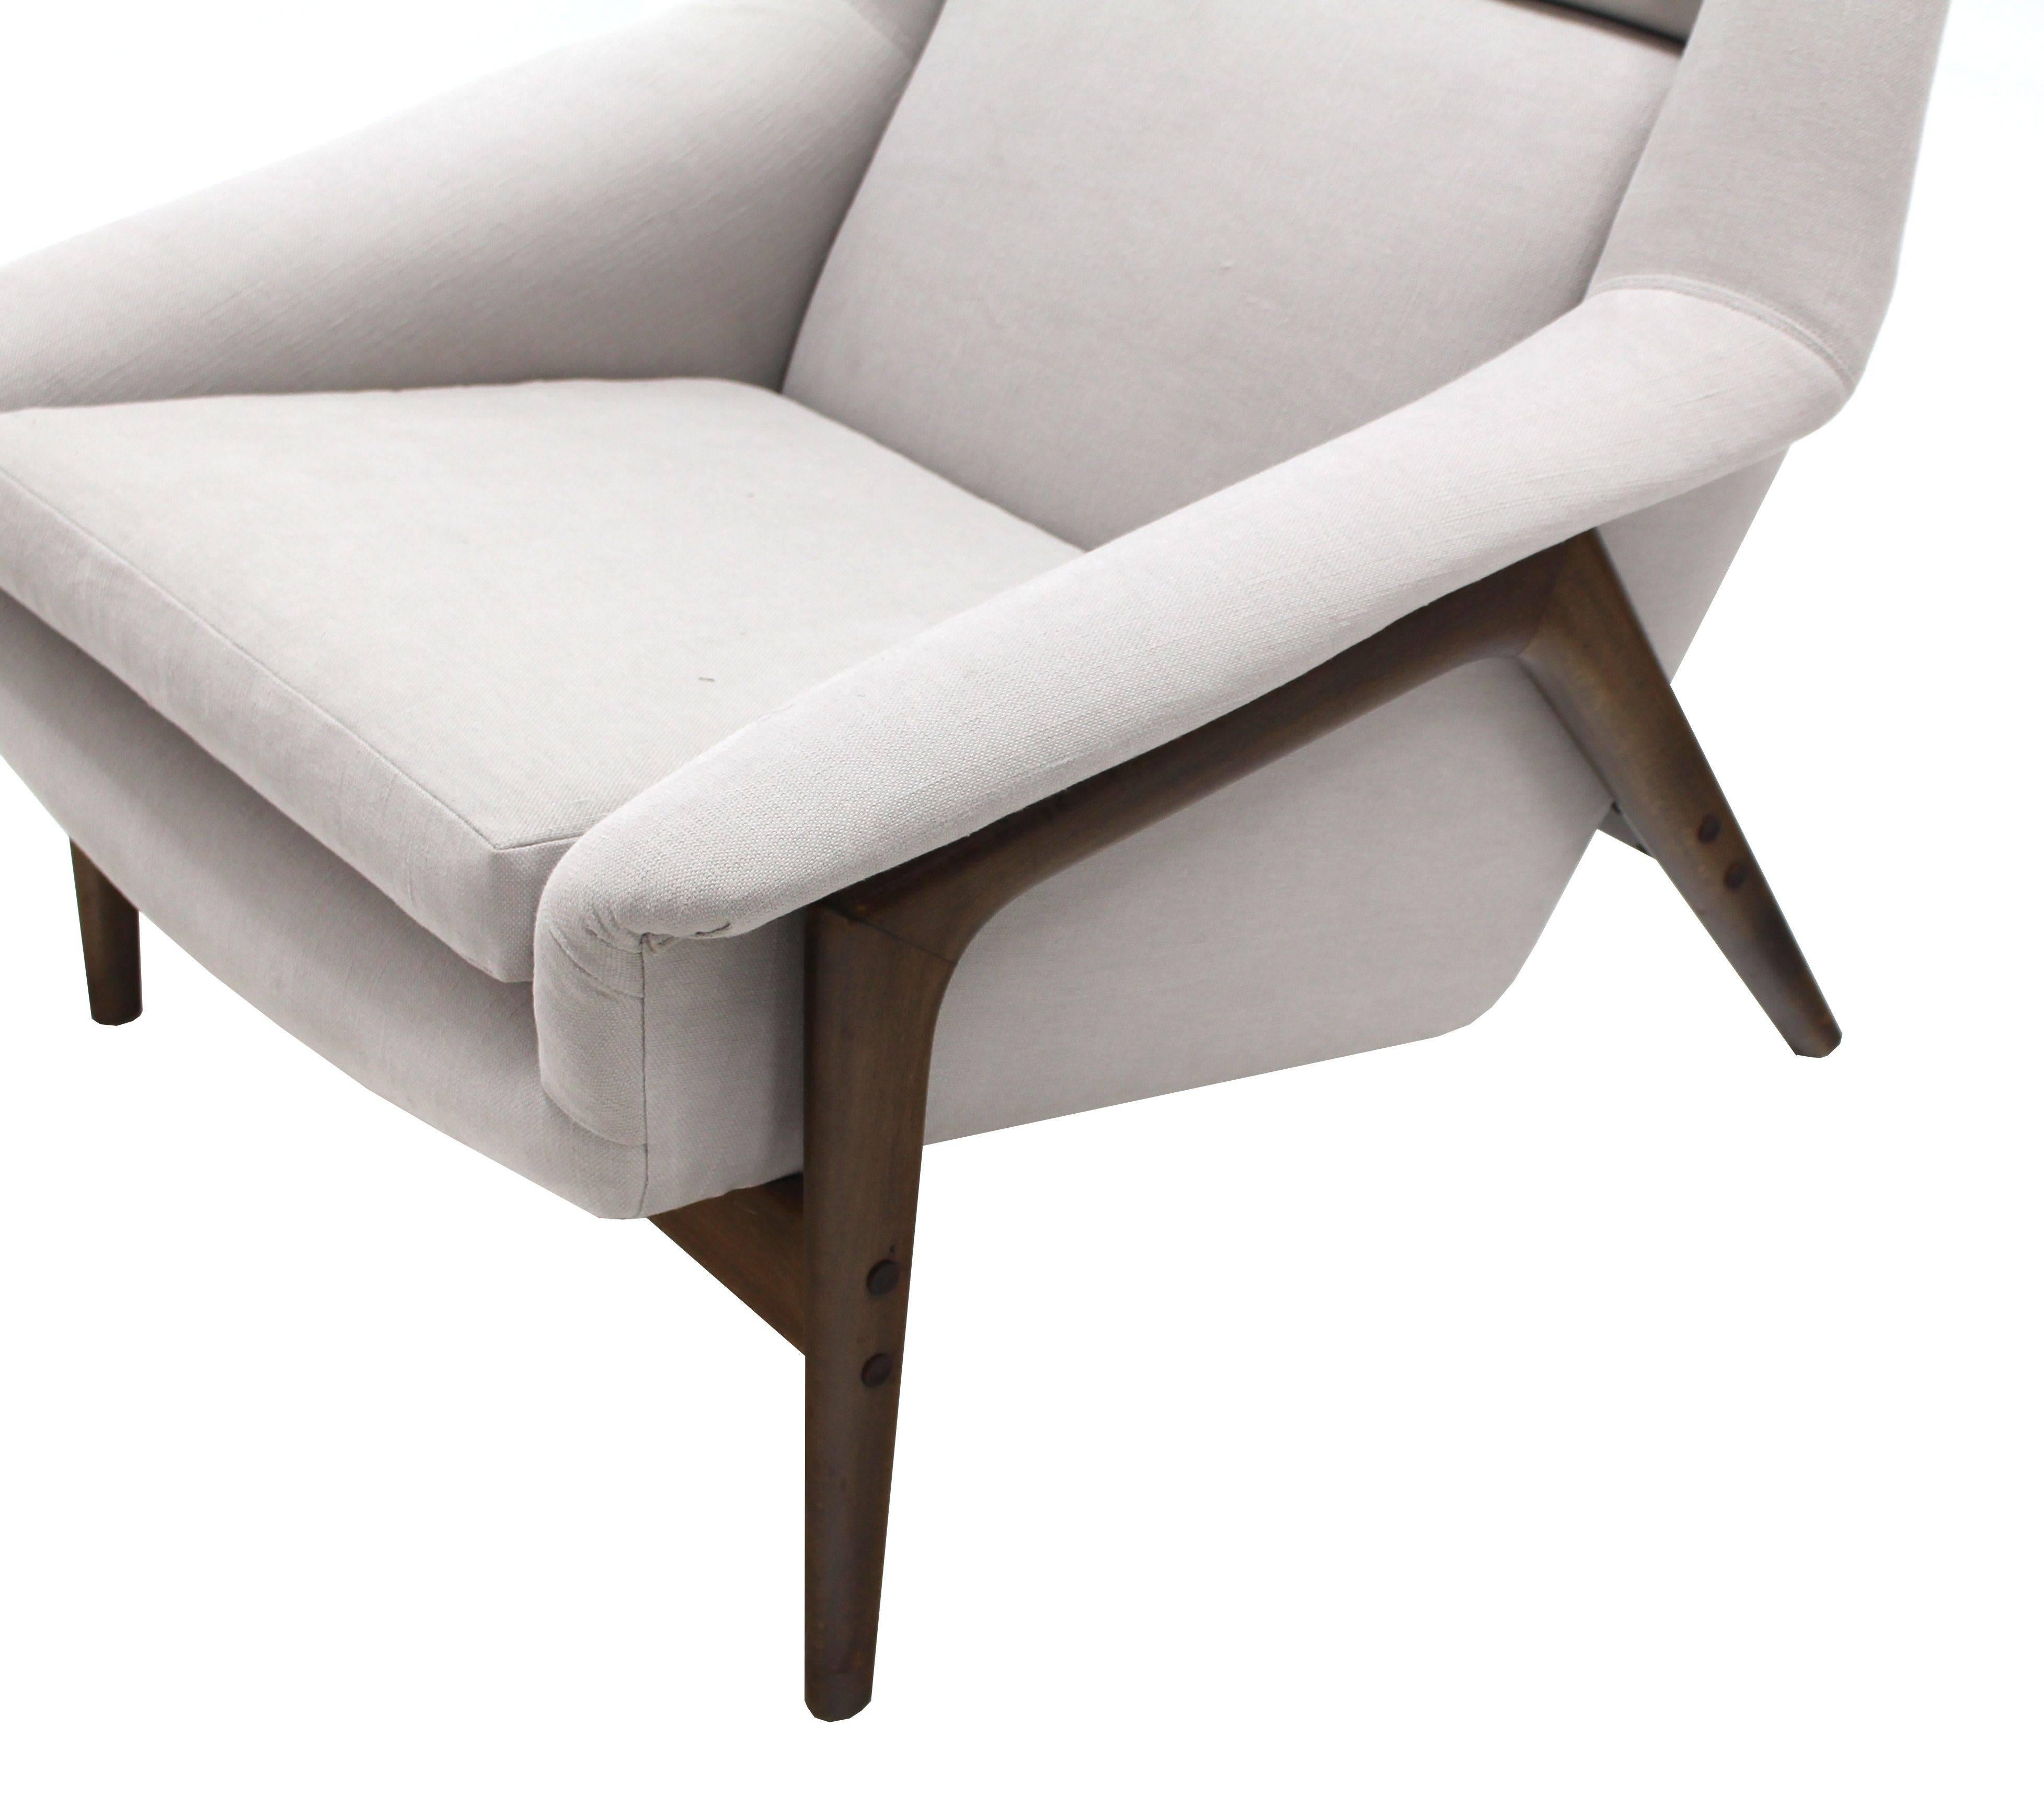 Lacquered Danish Mid Century Modern New Upholstery Lounge Chair Teak Frame